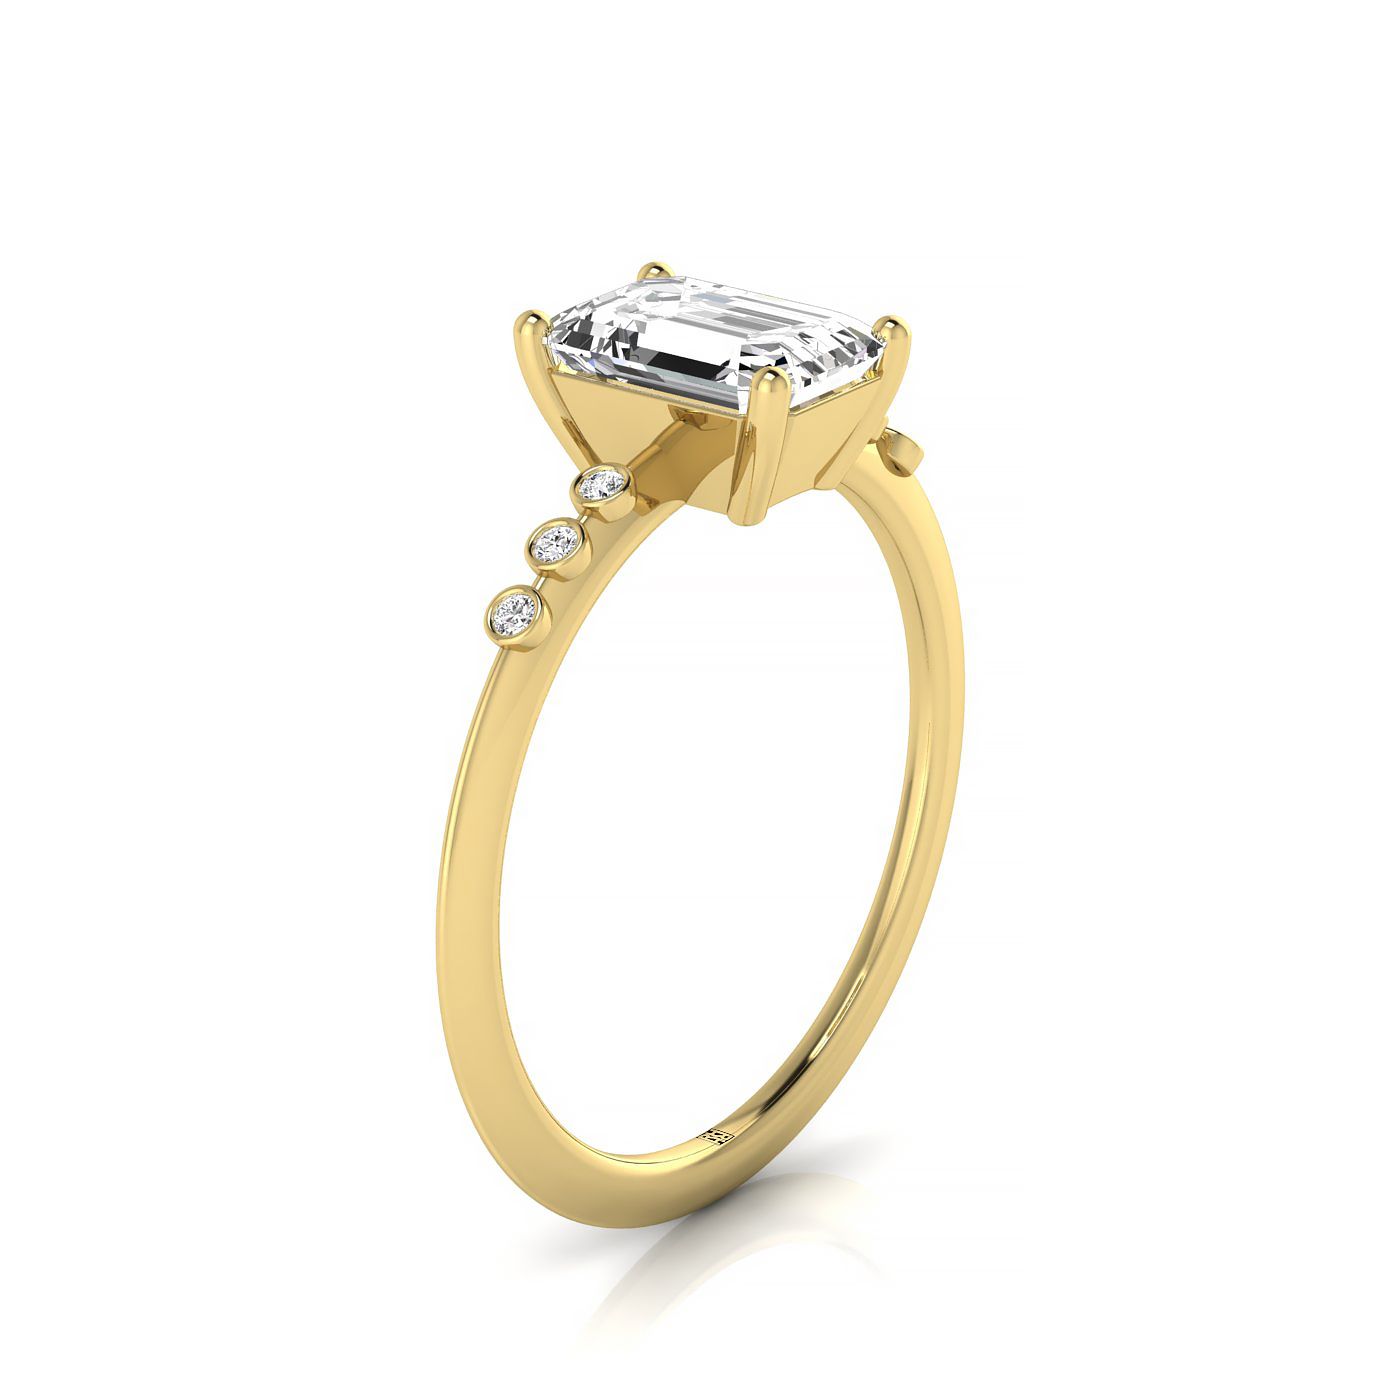 14ky Emerald Engagement Ring With 6 Bezel Set Round Diamonds On Shank